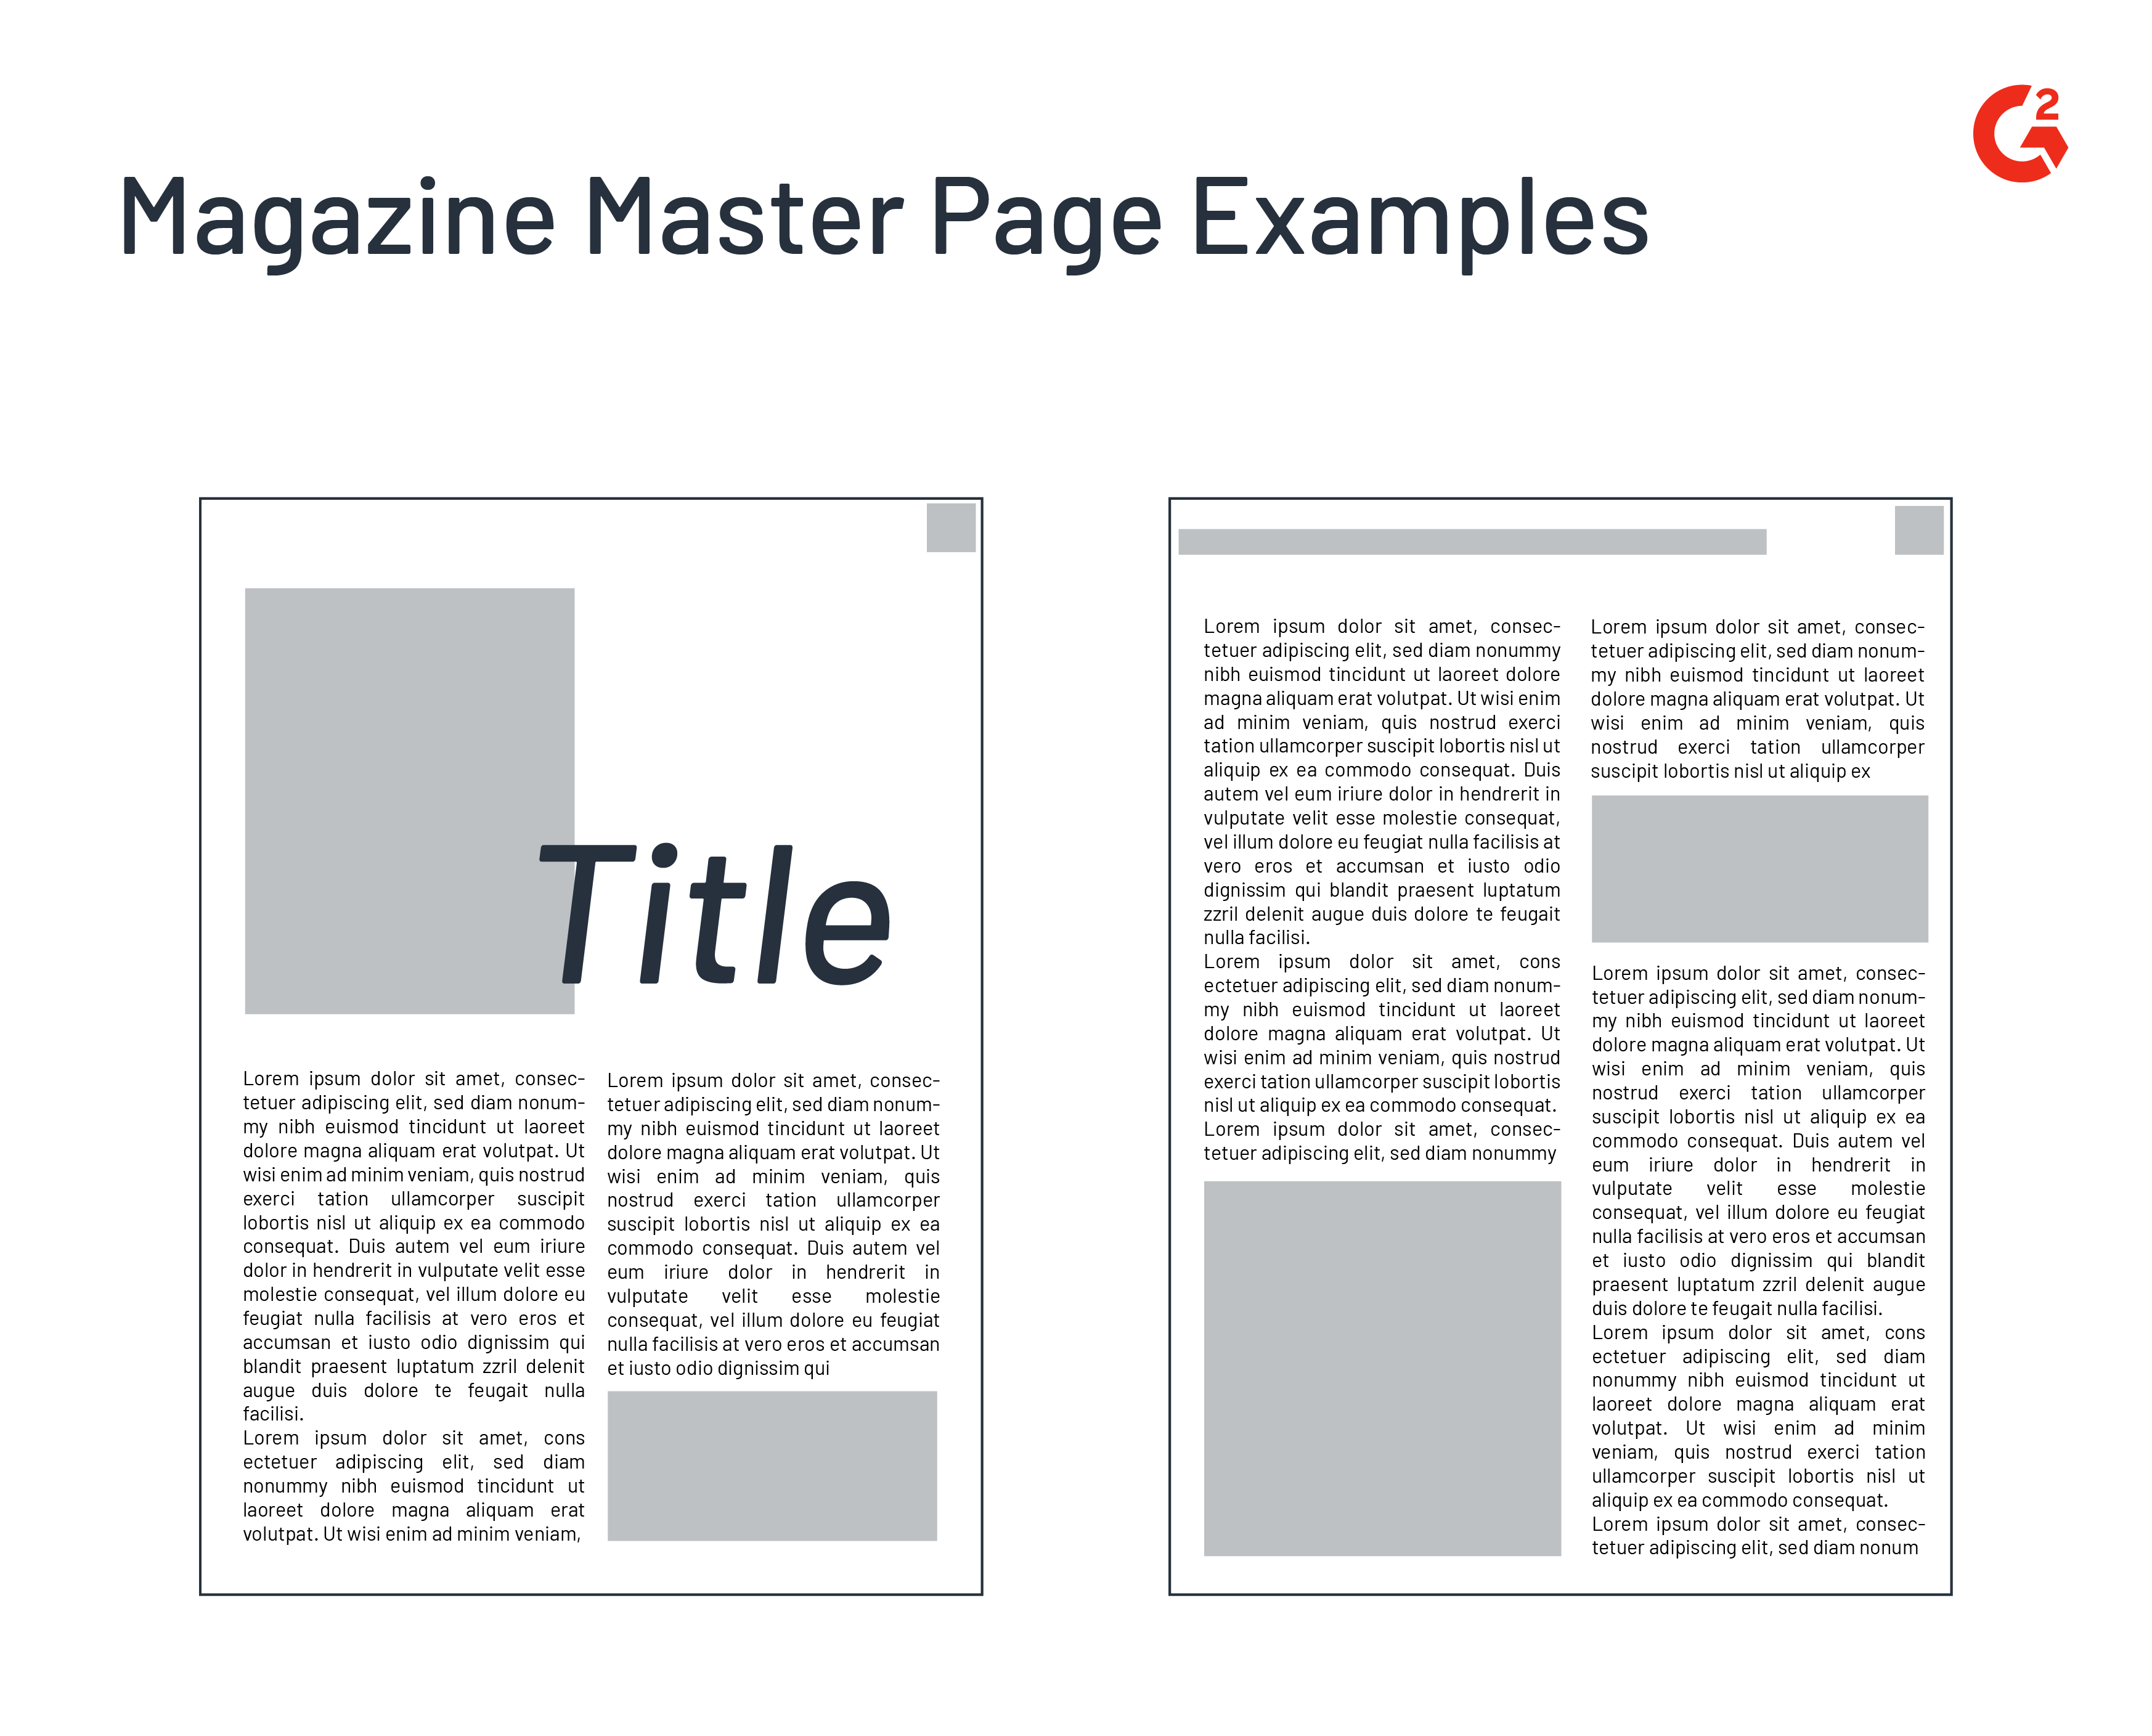 Magazine Master Page Example 